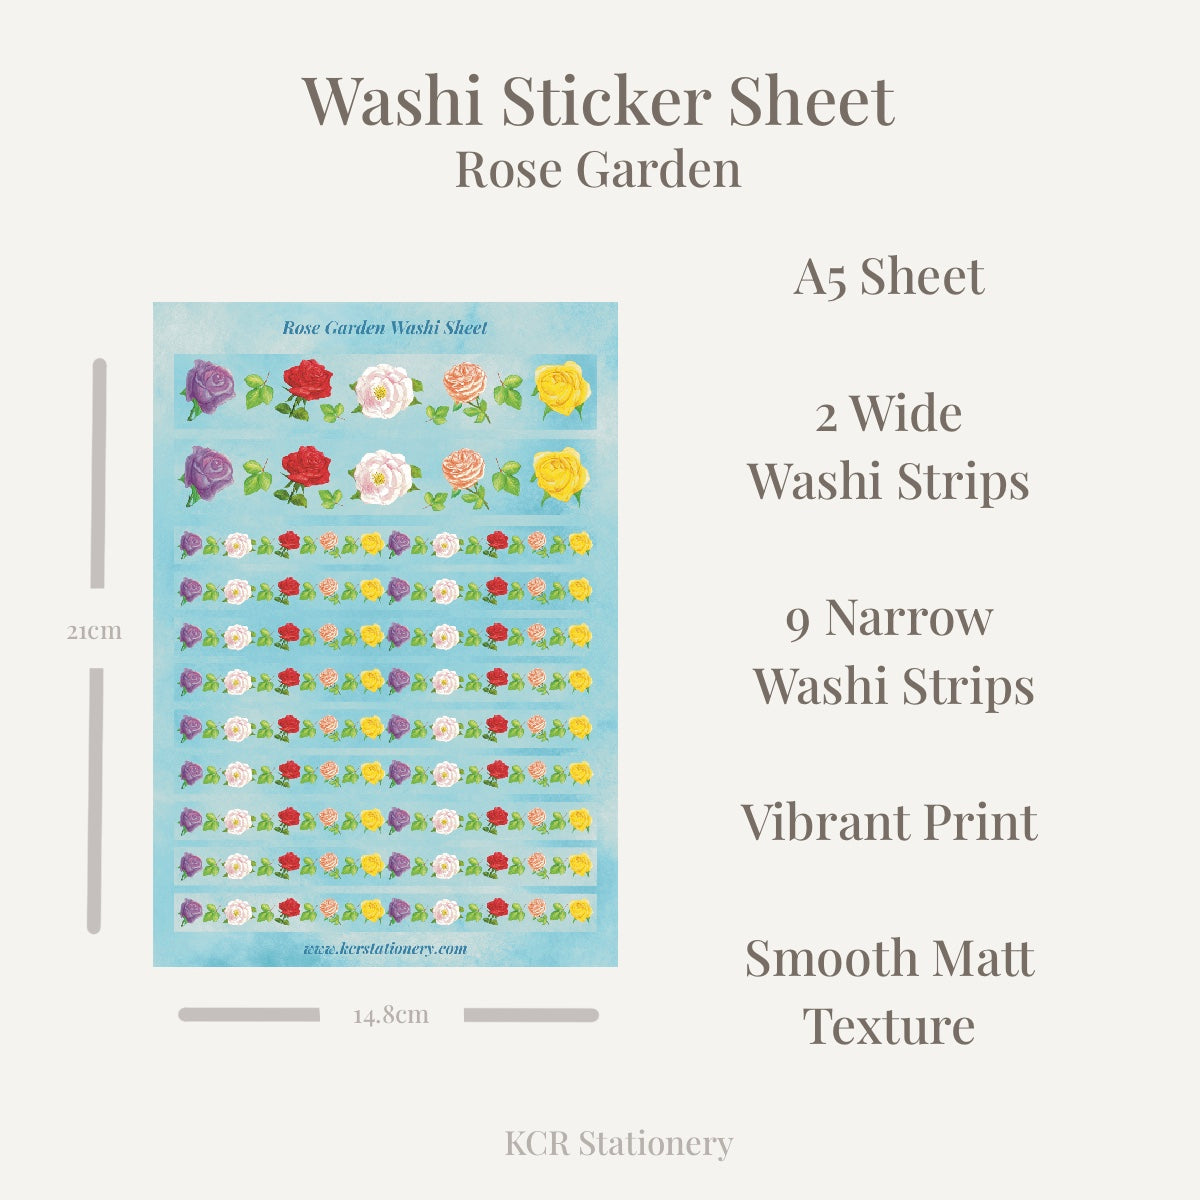 Washi sticker sheet infographic 